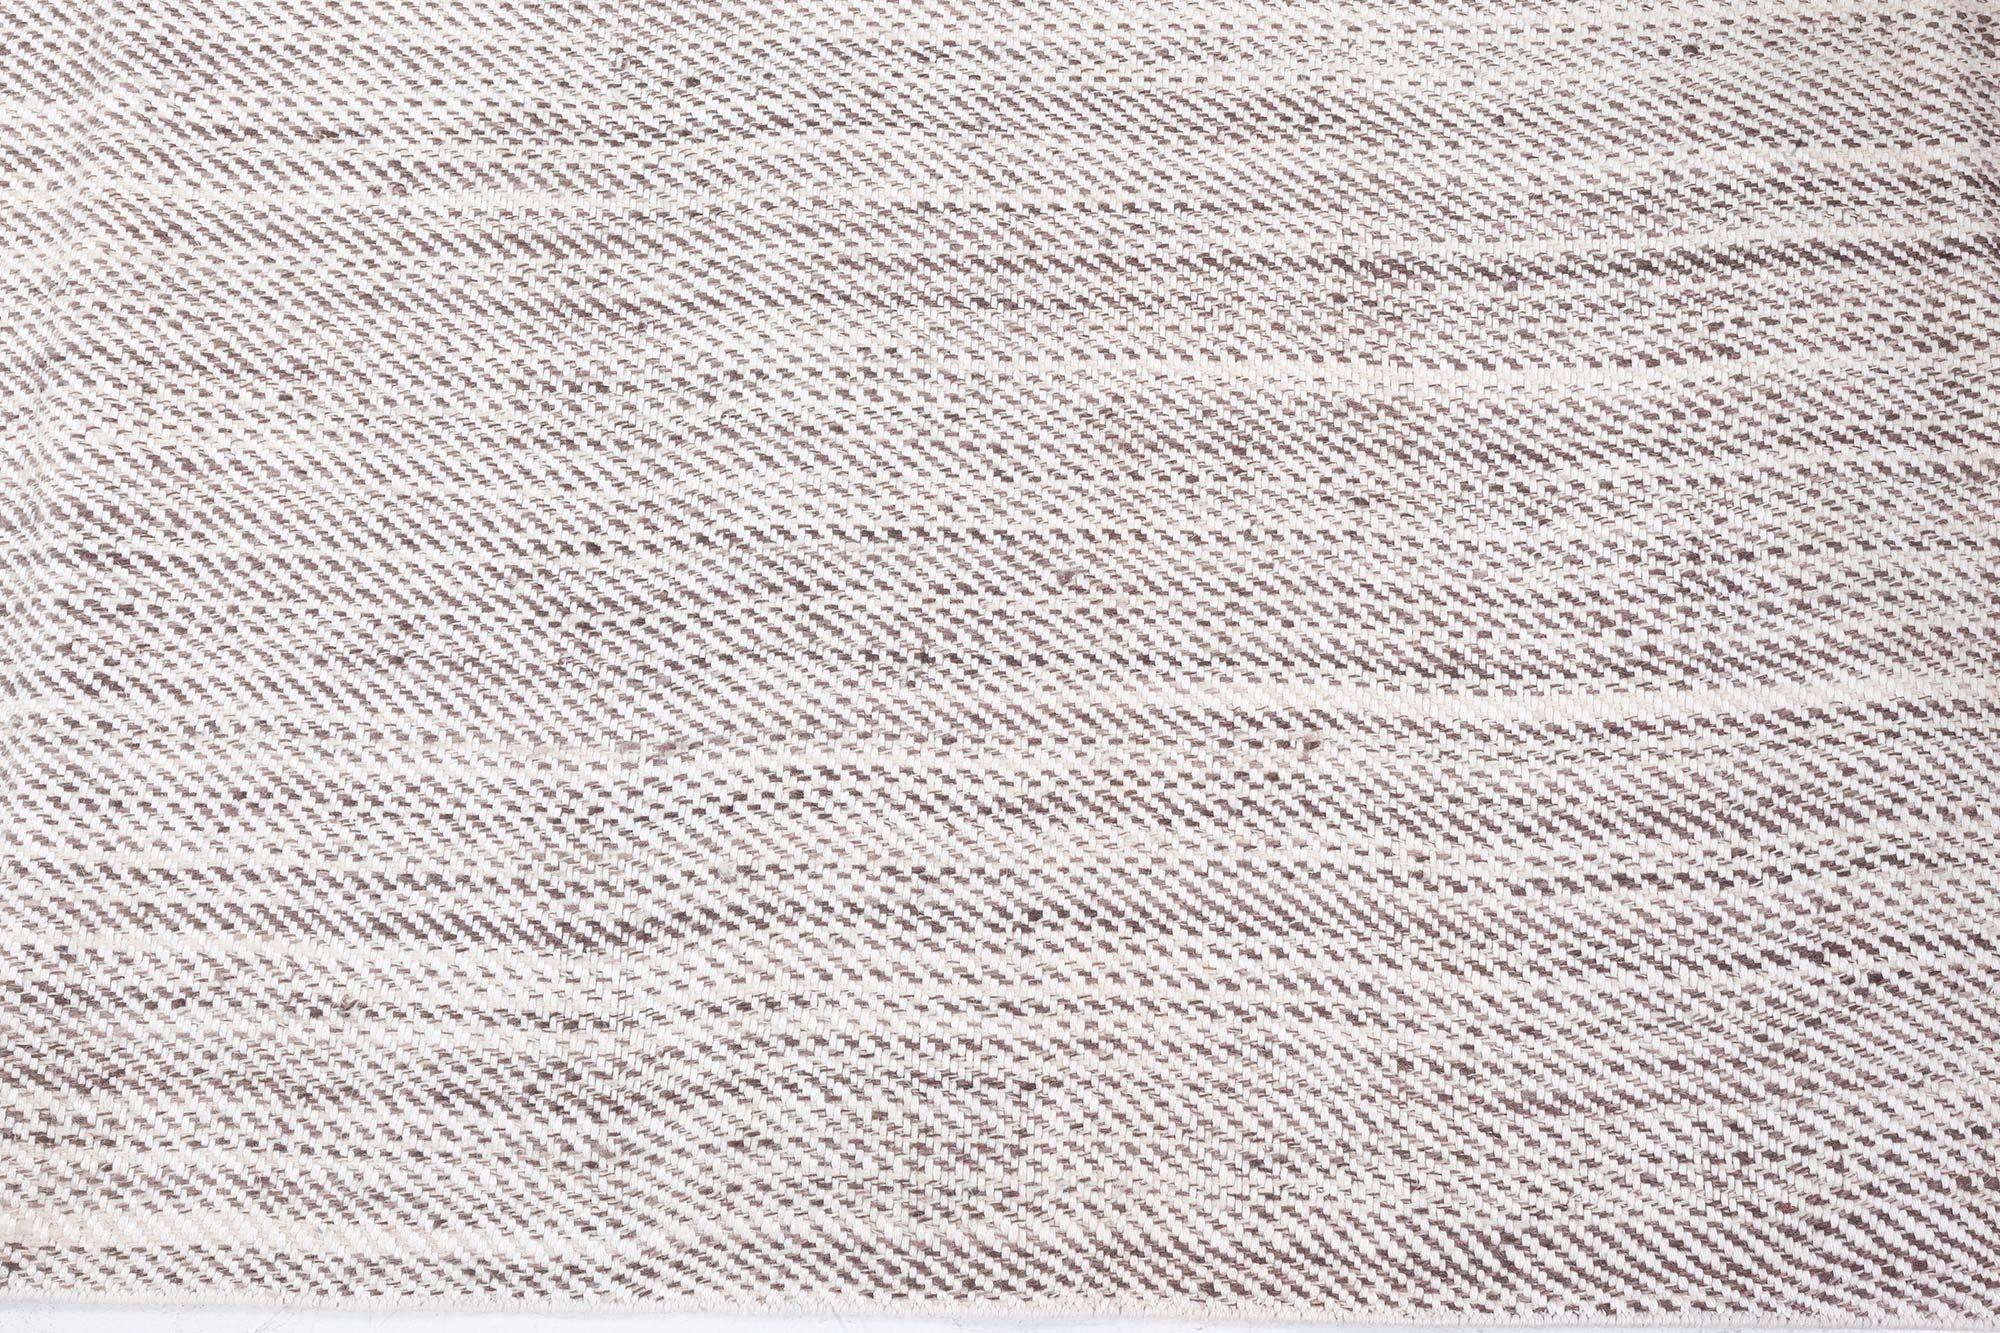 Contemporary flat weave rug by Doris Leslie Blau
Size: 4'1